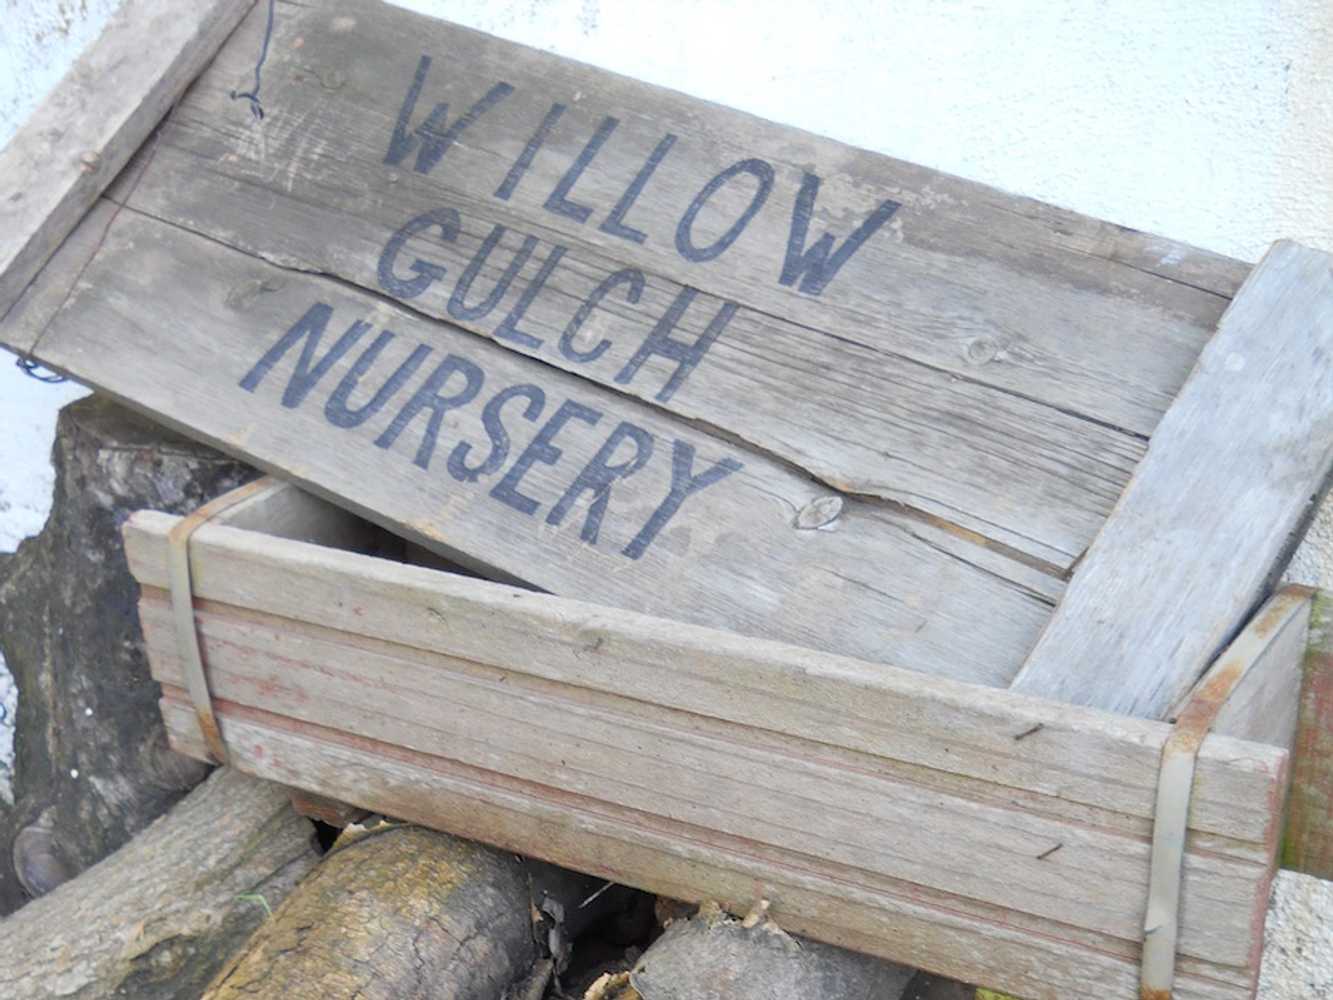 Willow Gulch Nursery Project